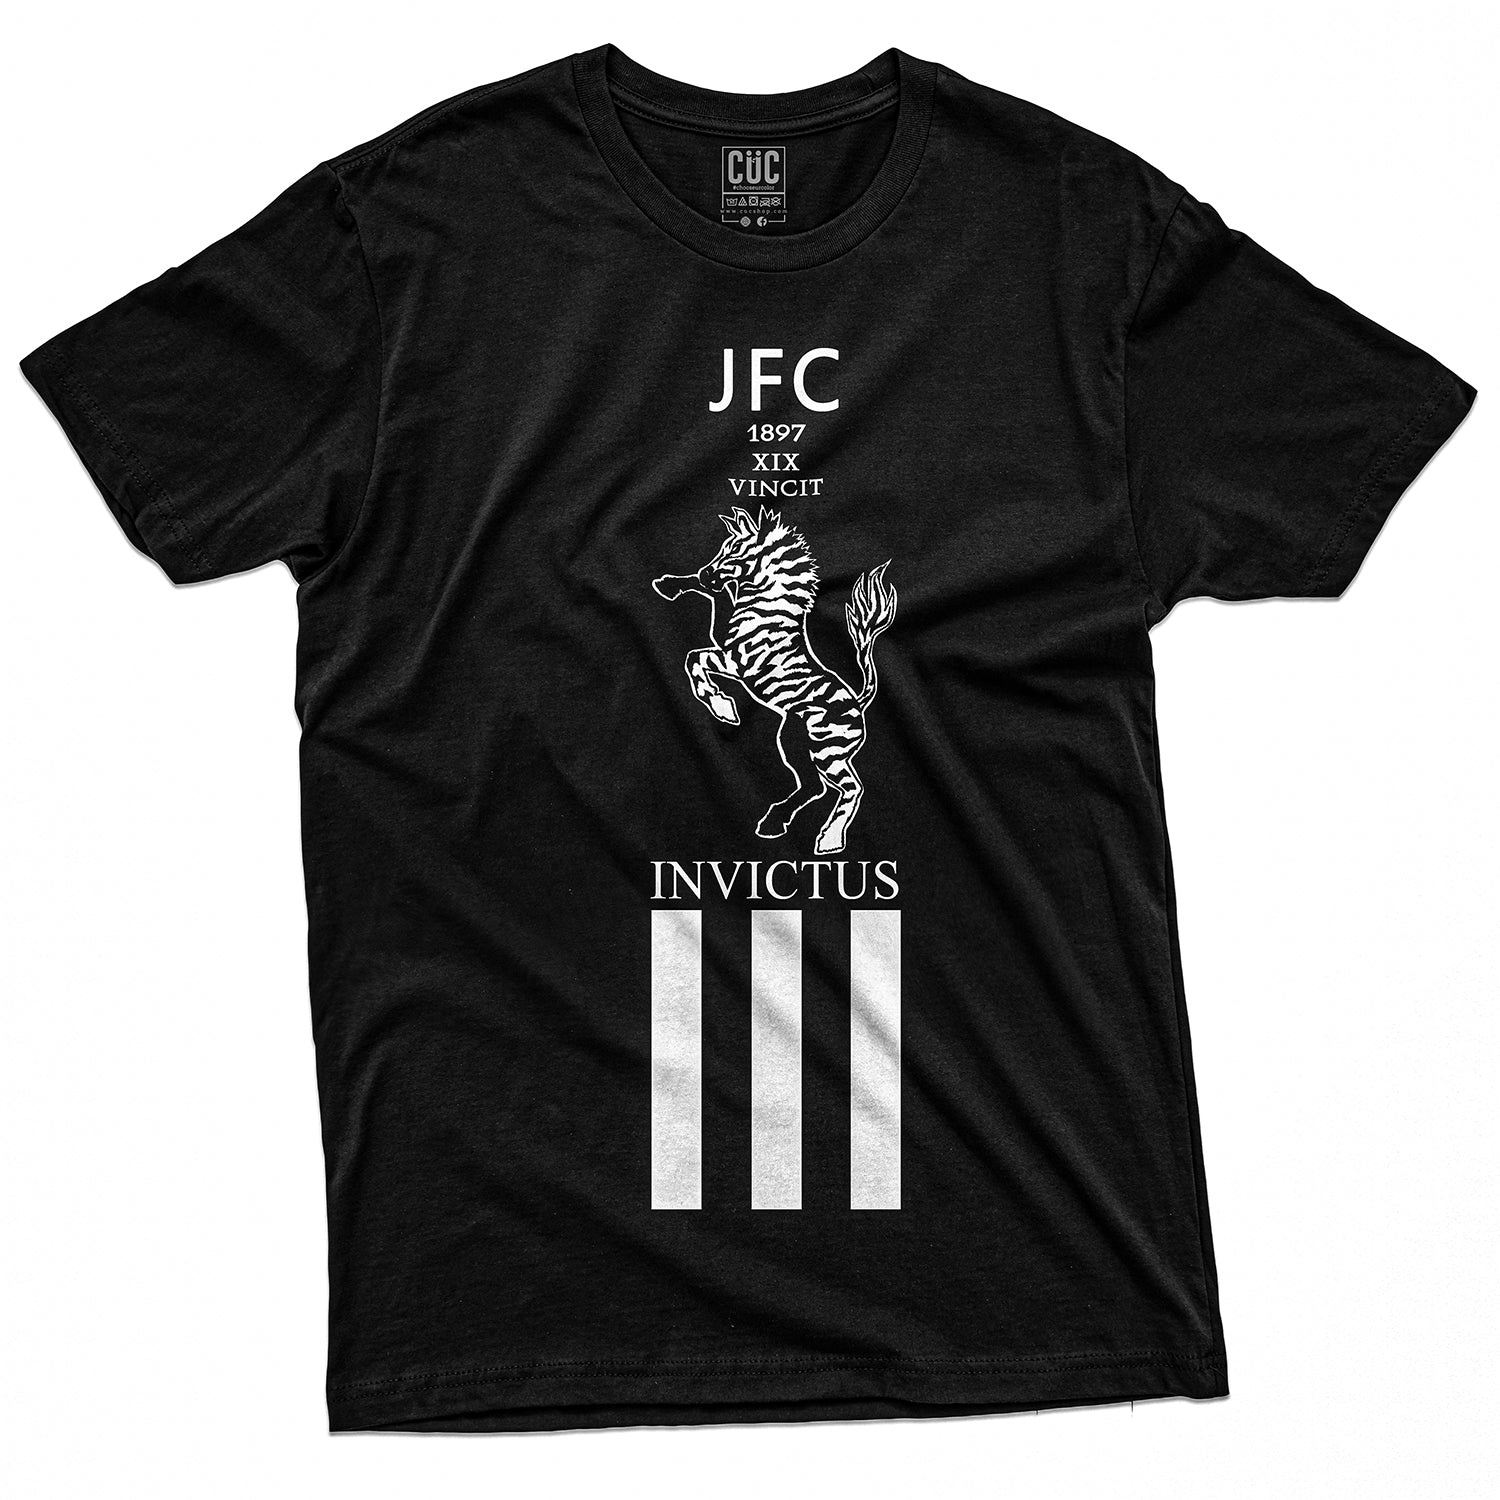 CUC T-Shirt JFC INVICTUS - Juventus - Calcio  #chooseurcolor - CUC chooseurcolor